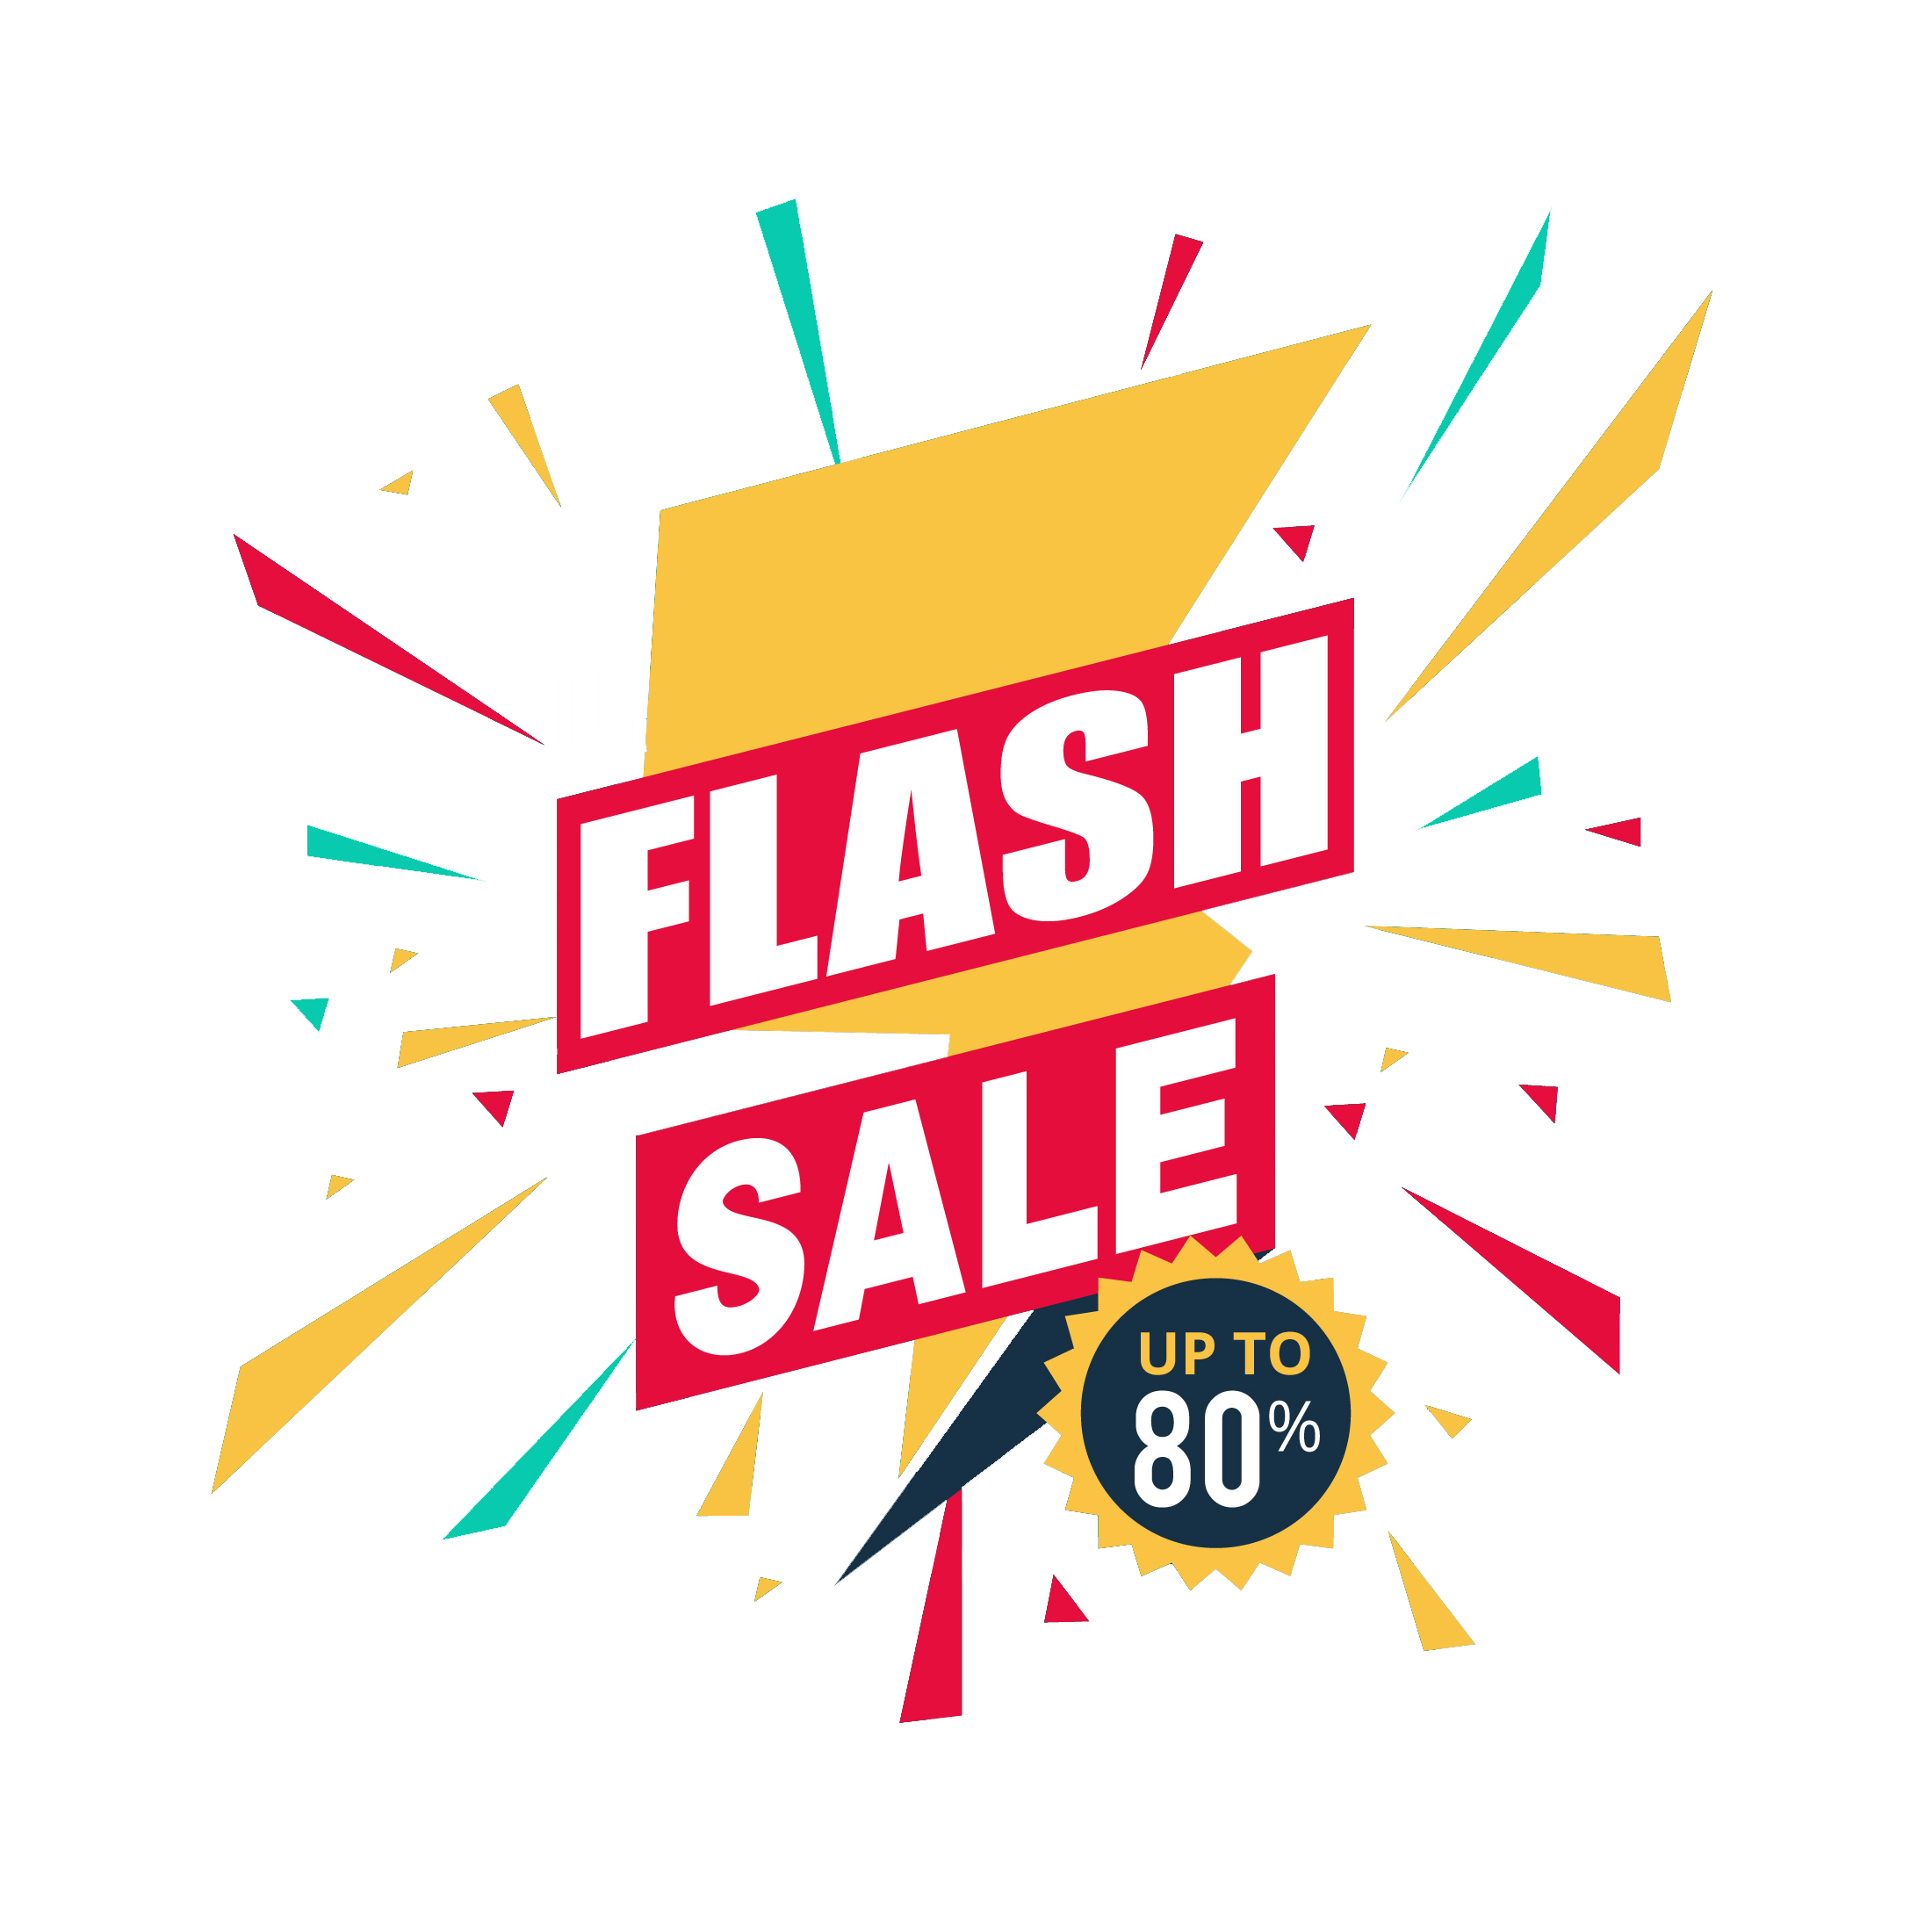 Flash Sale PNG HD Image